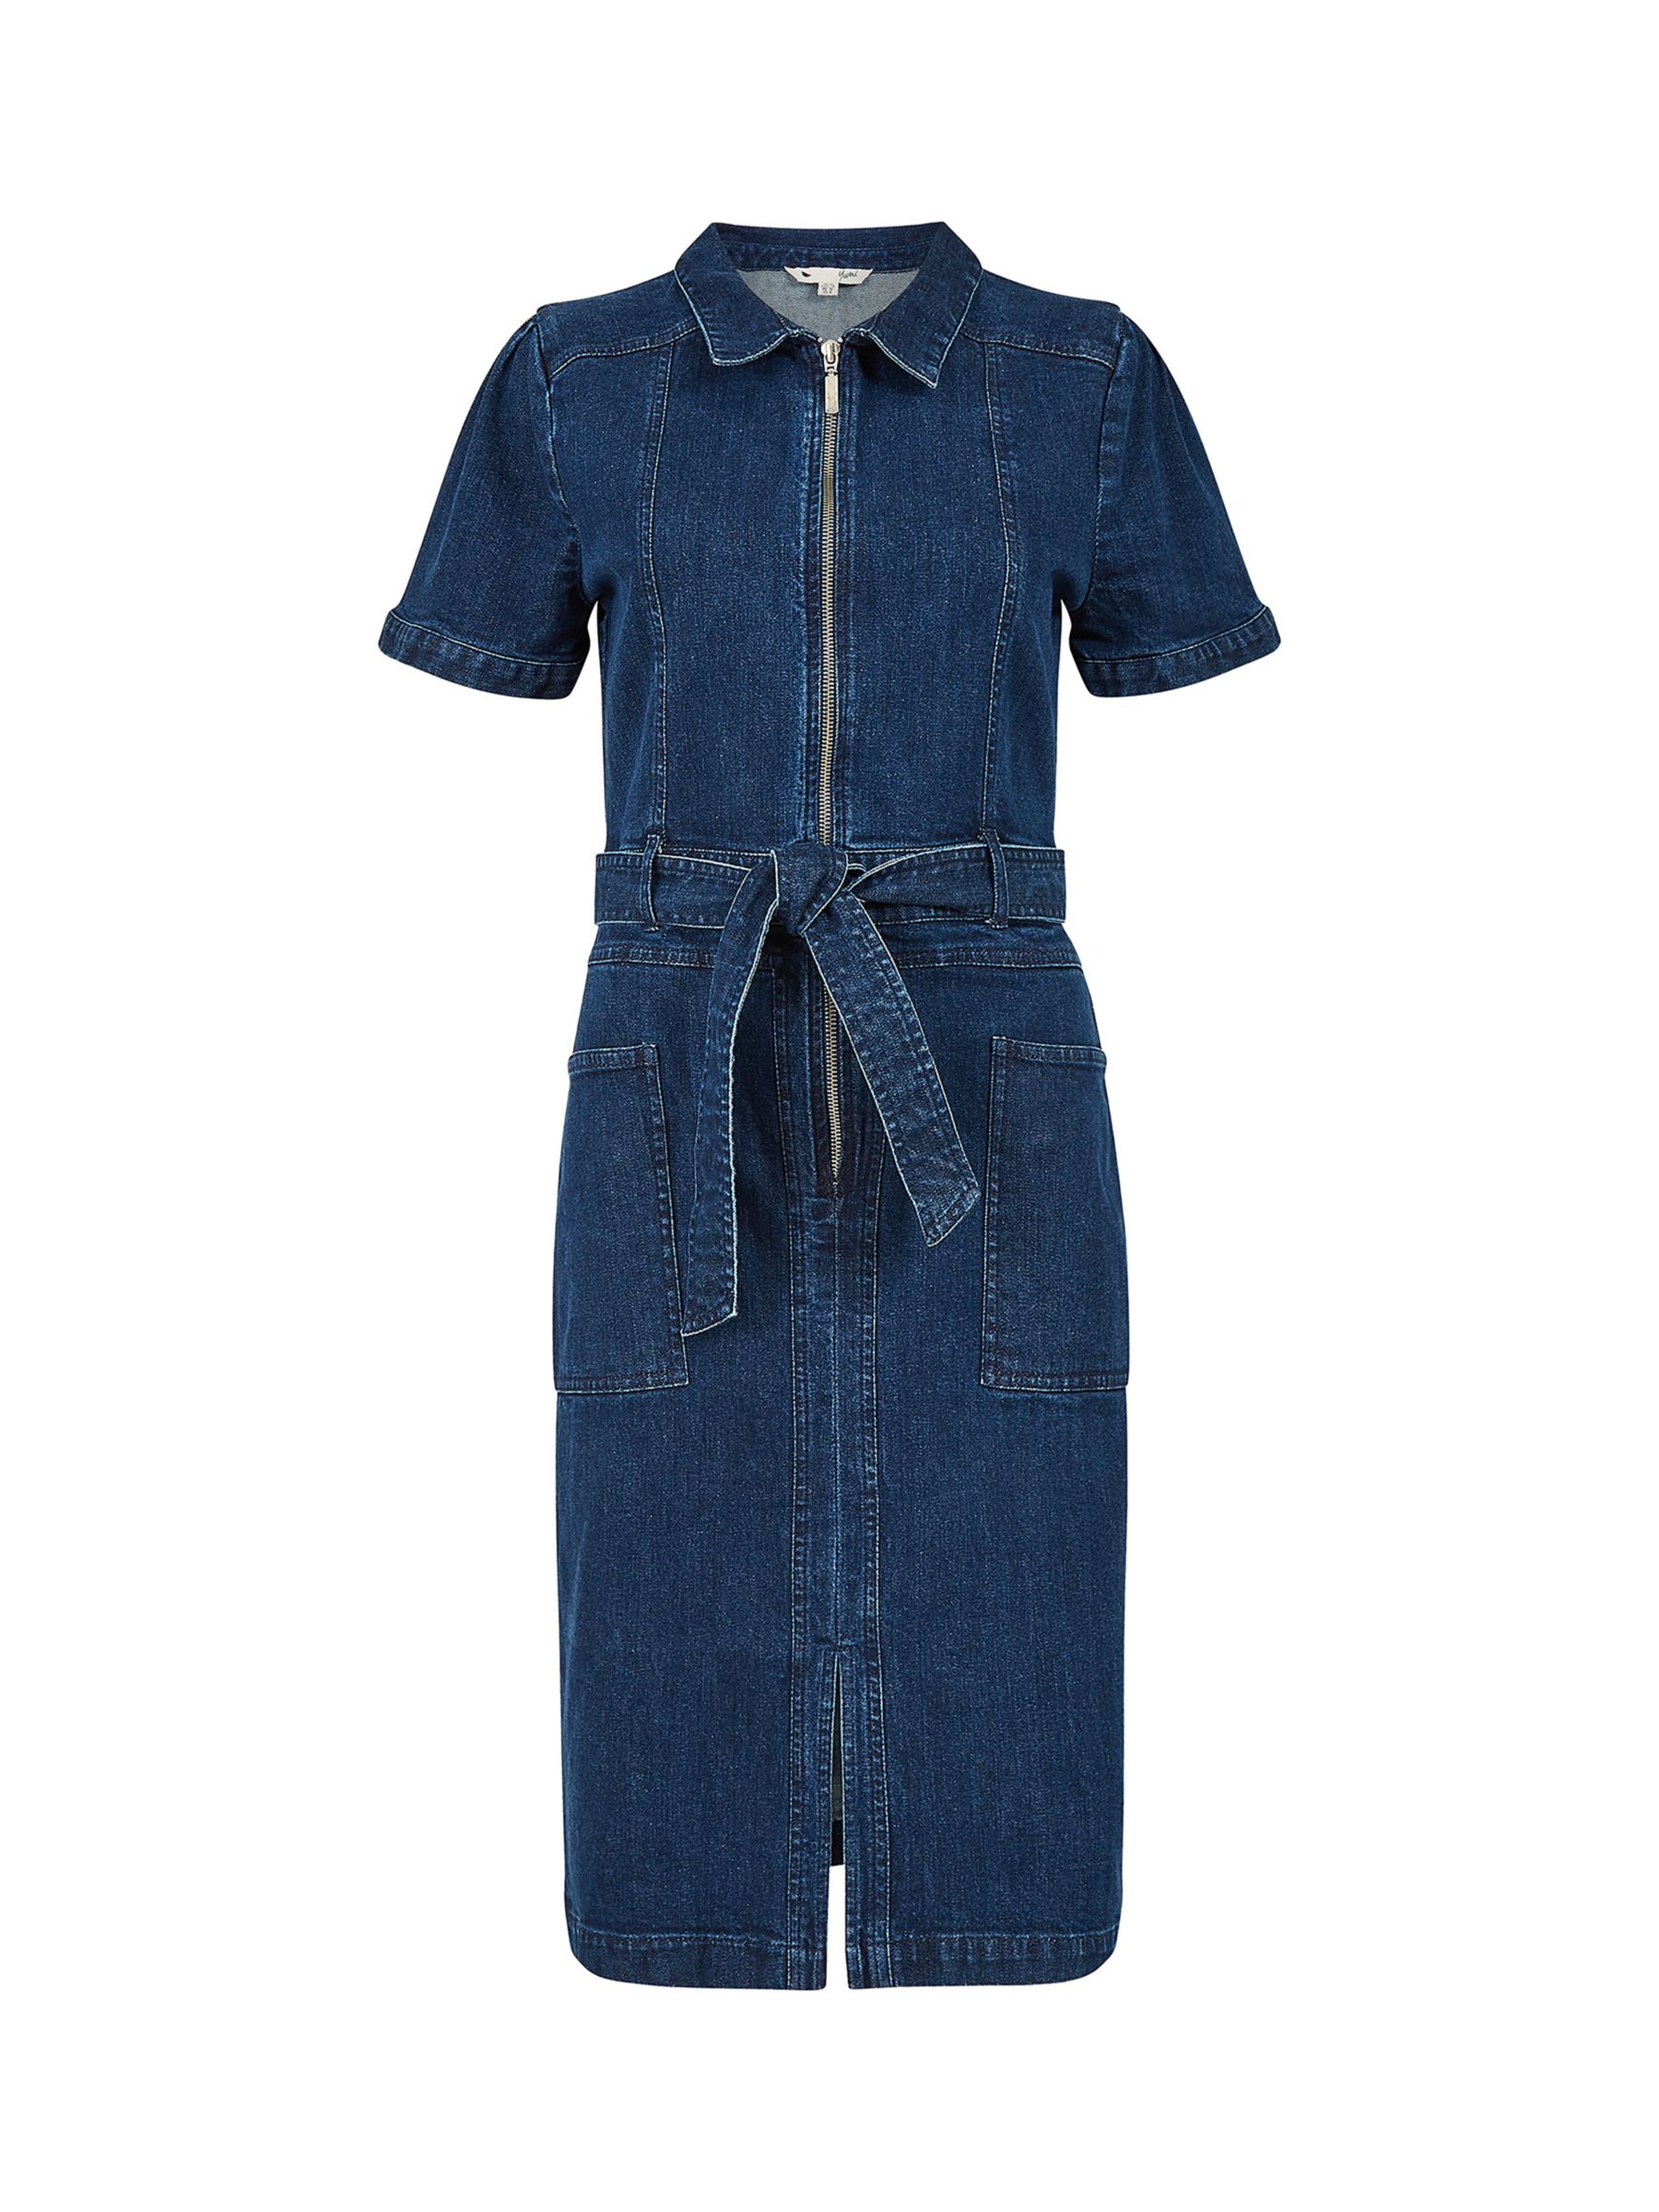 Yumi Denim Zip Shirt Dress, Dark Blue at John Lewis & Partners